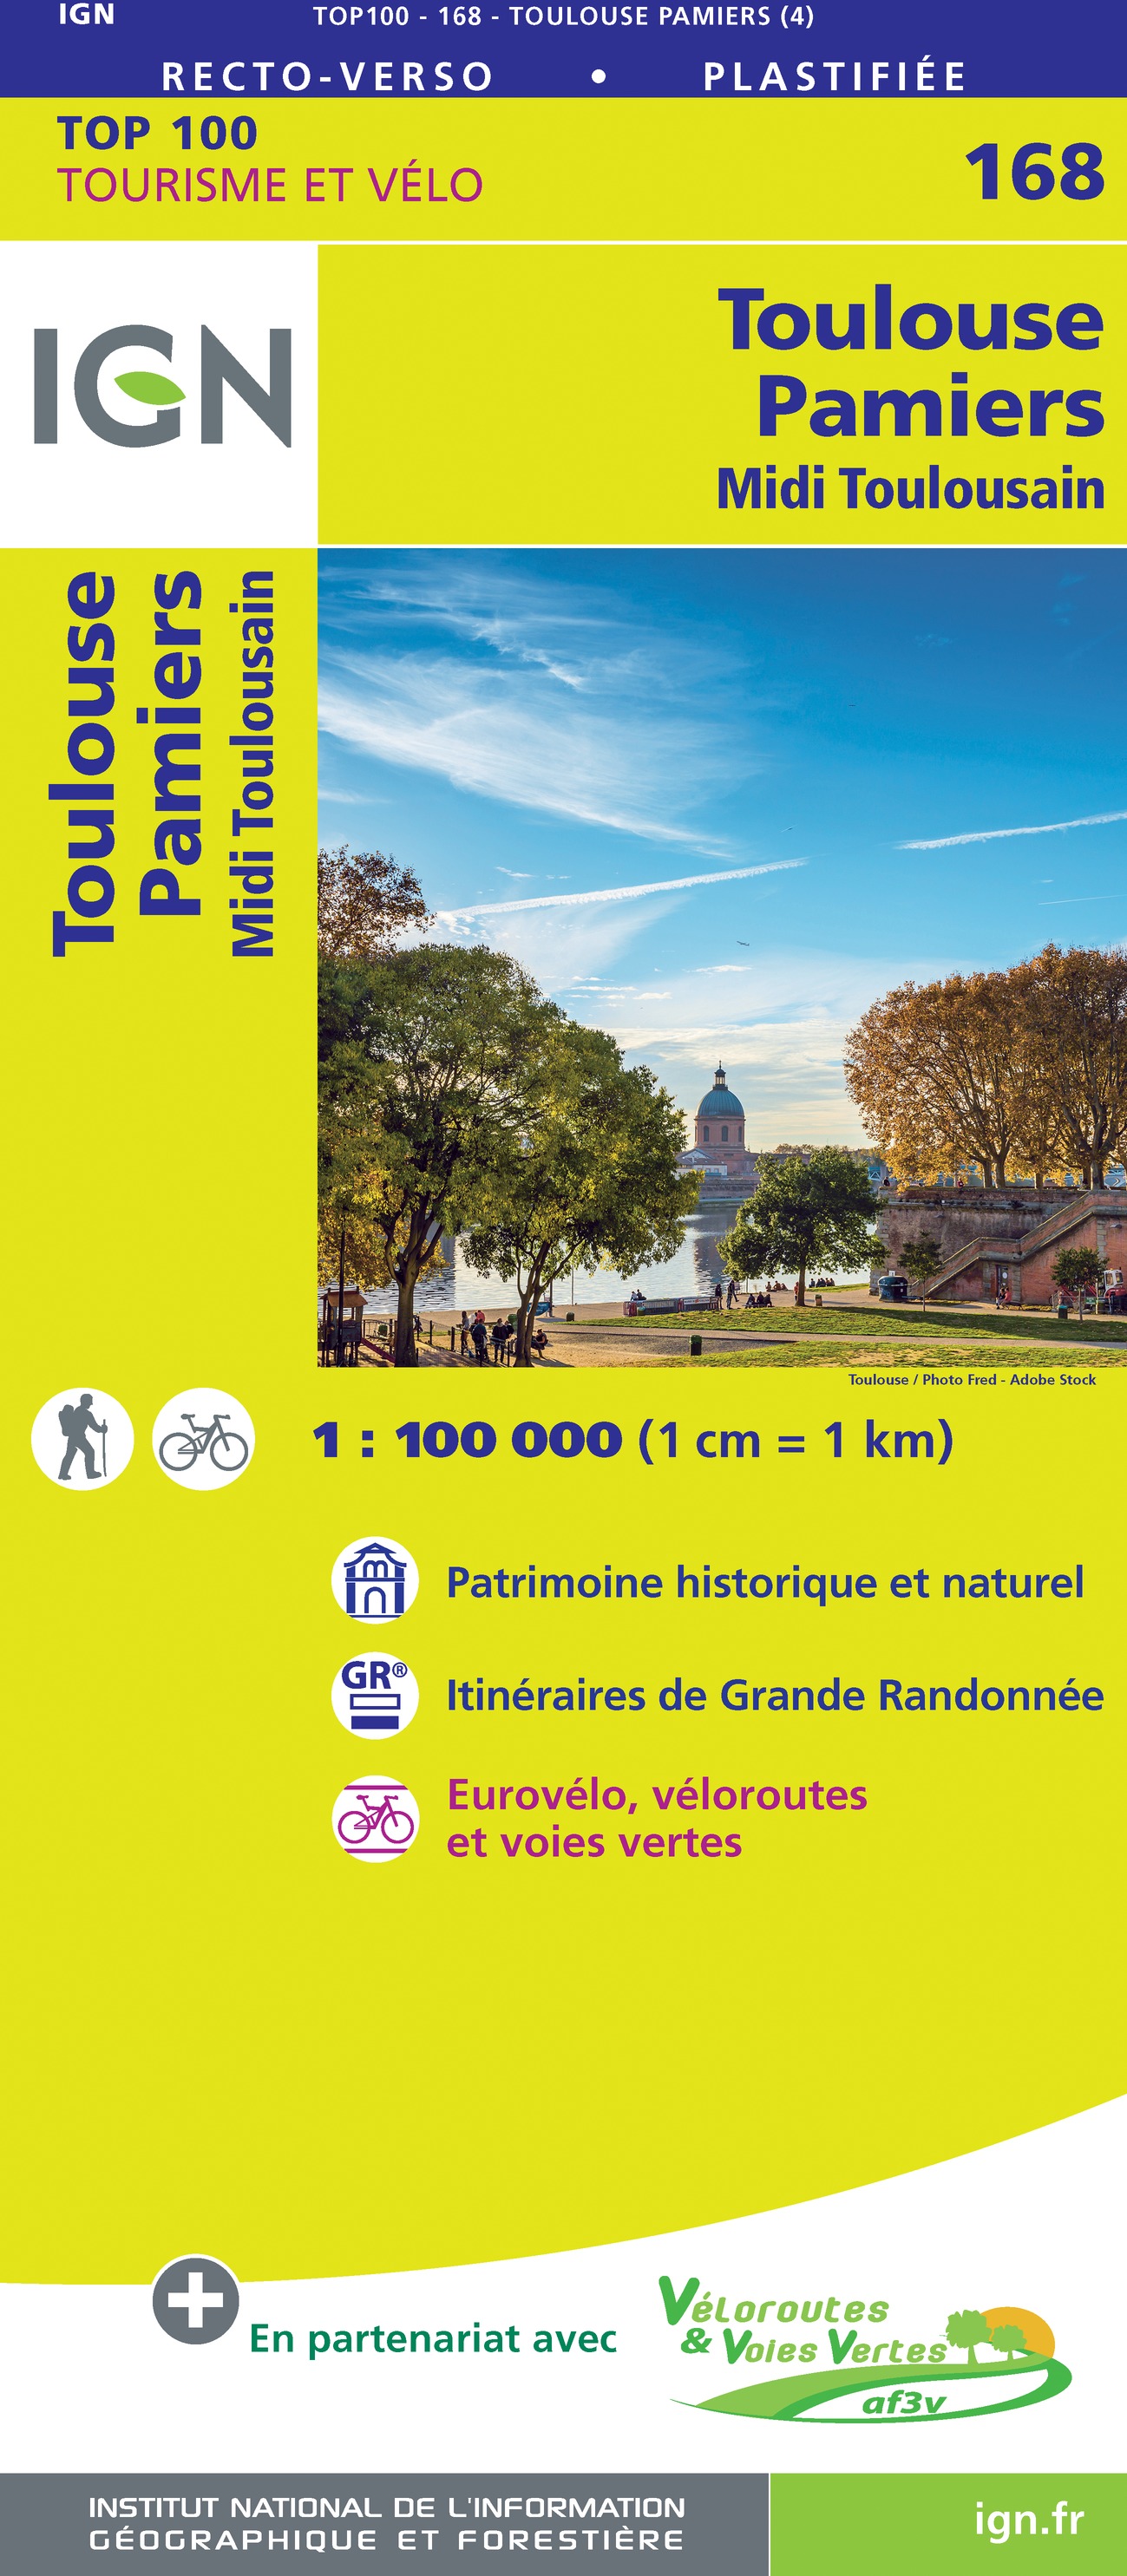 Online bestellen: Fietskaart - Wegenkaart - landkaart 168 Toulouse - Pamiers | IGN - Institut Géographique National